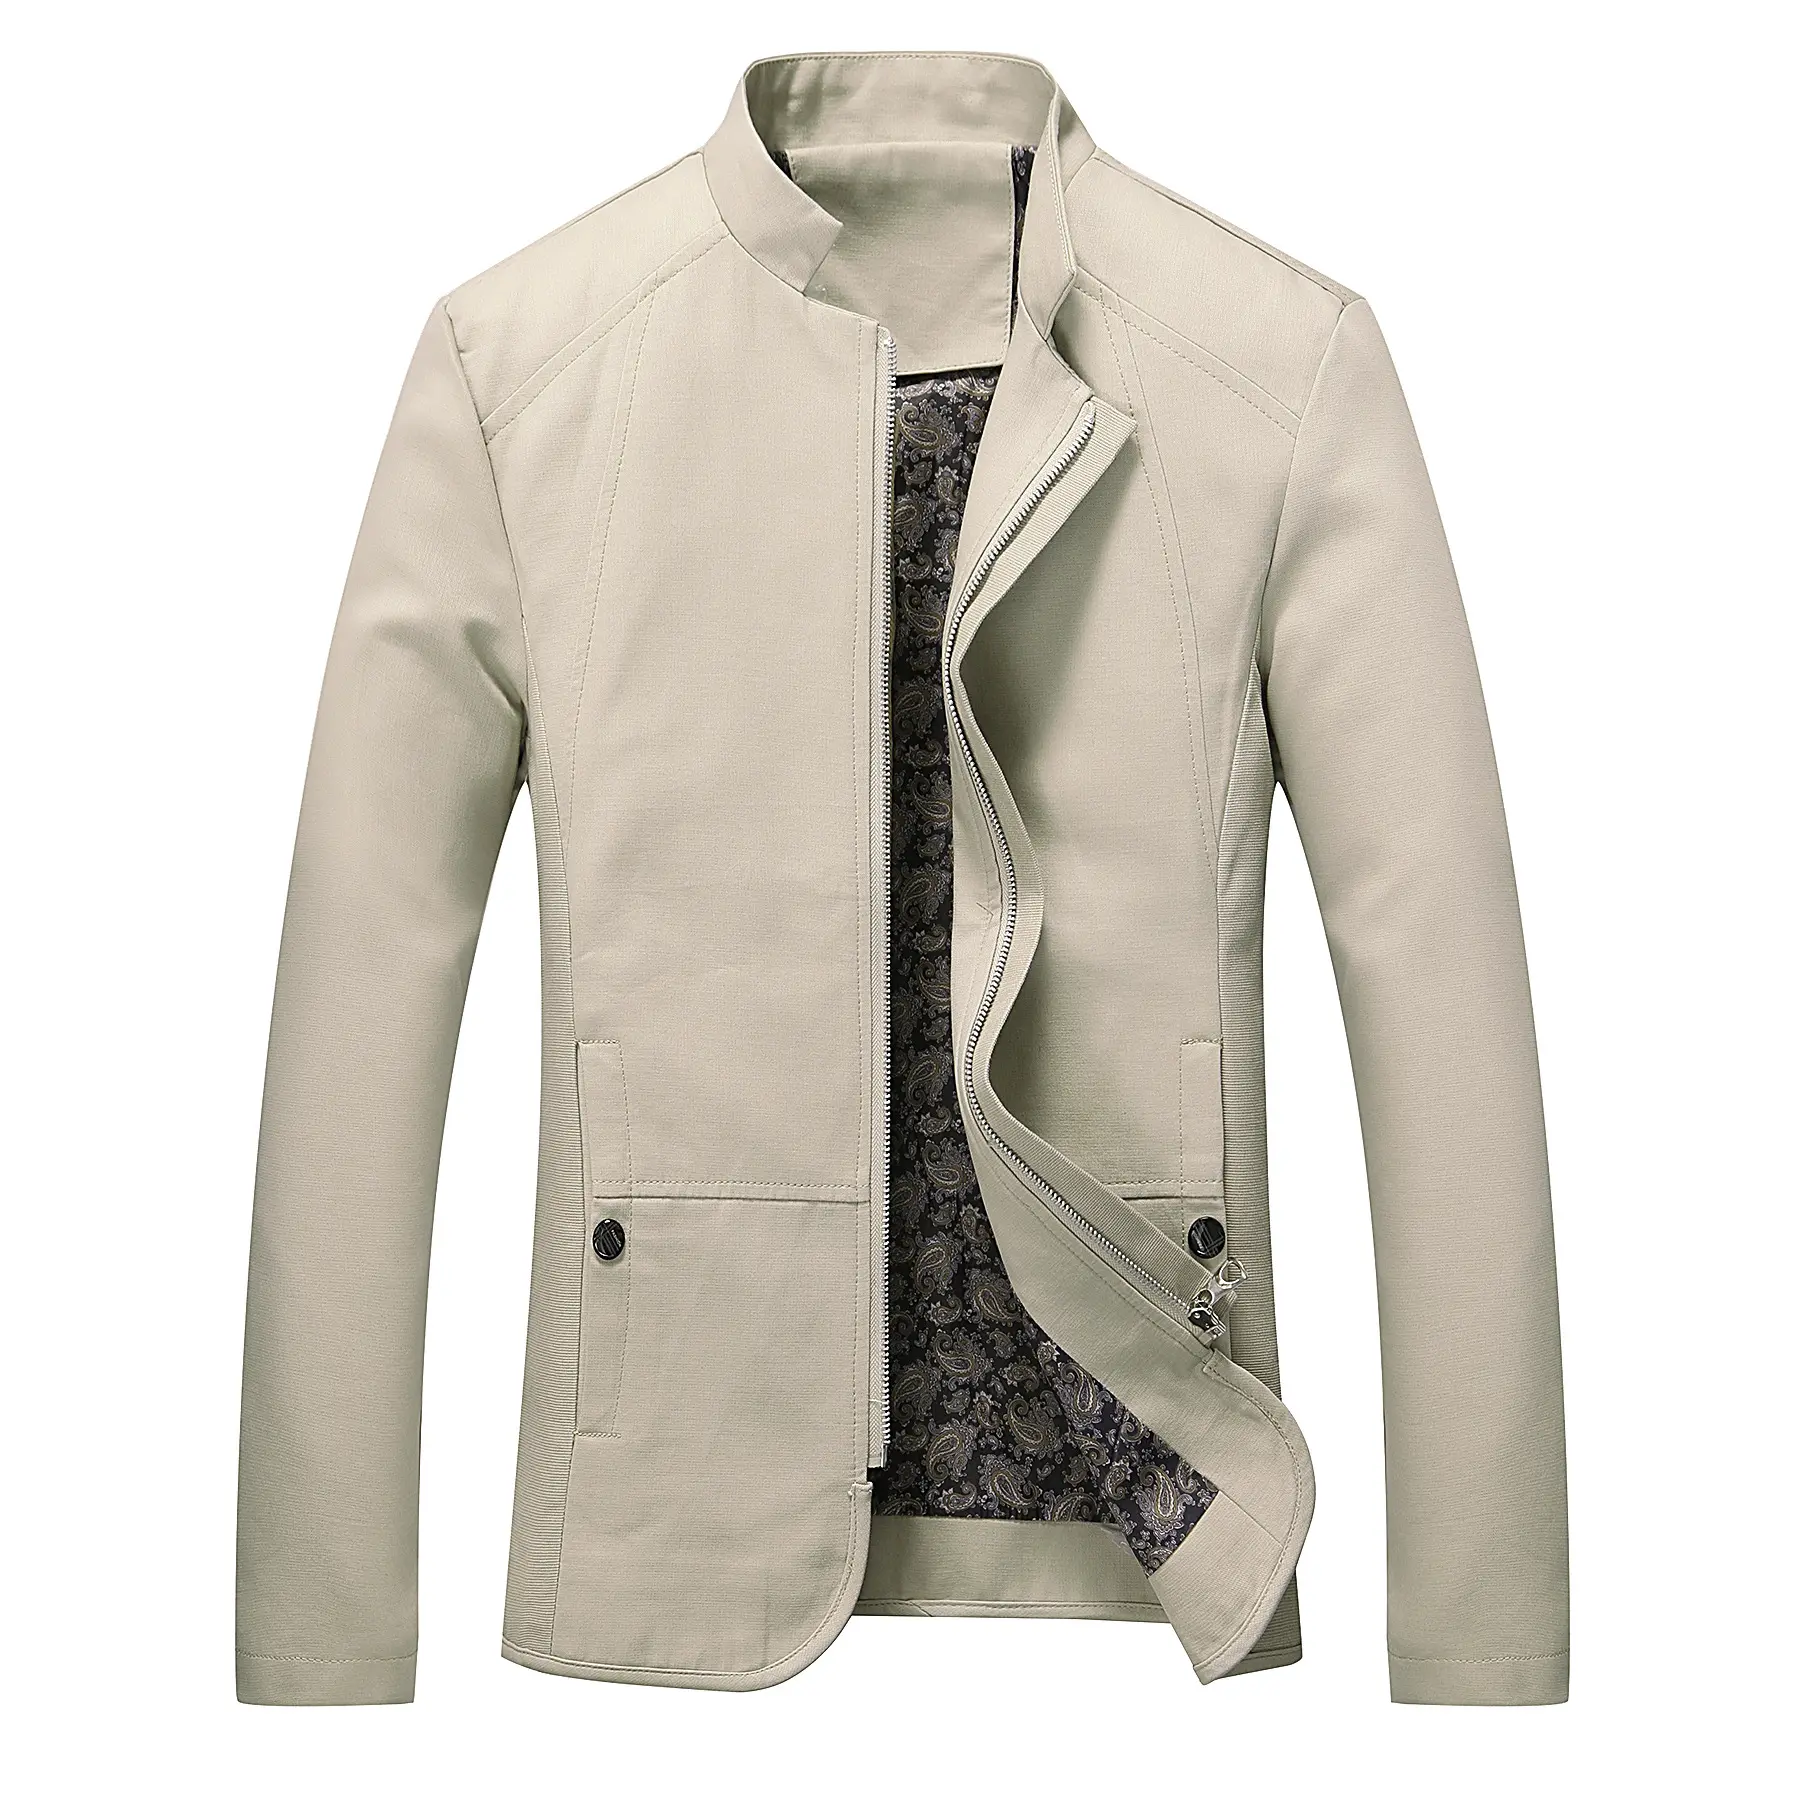 Discount Price Mass Customization Zipper Jacket Fashion Varsity Jacket Casual Bomber Jacket